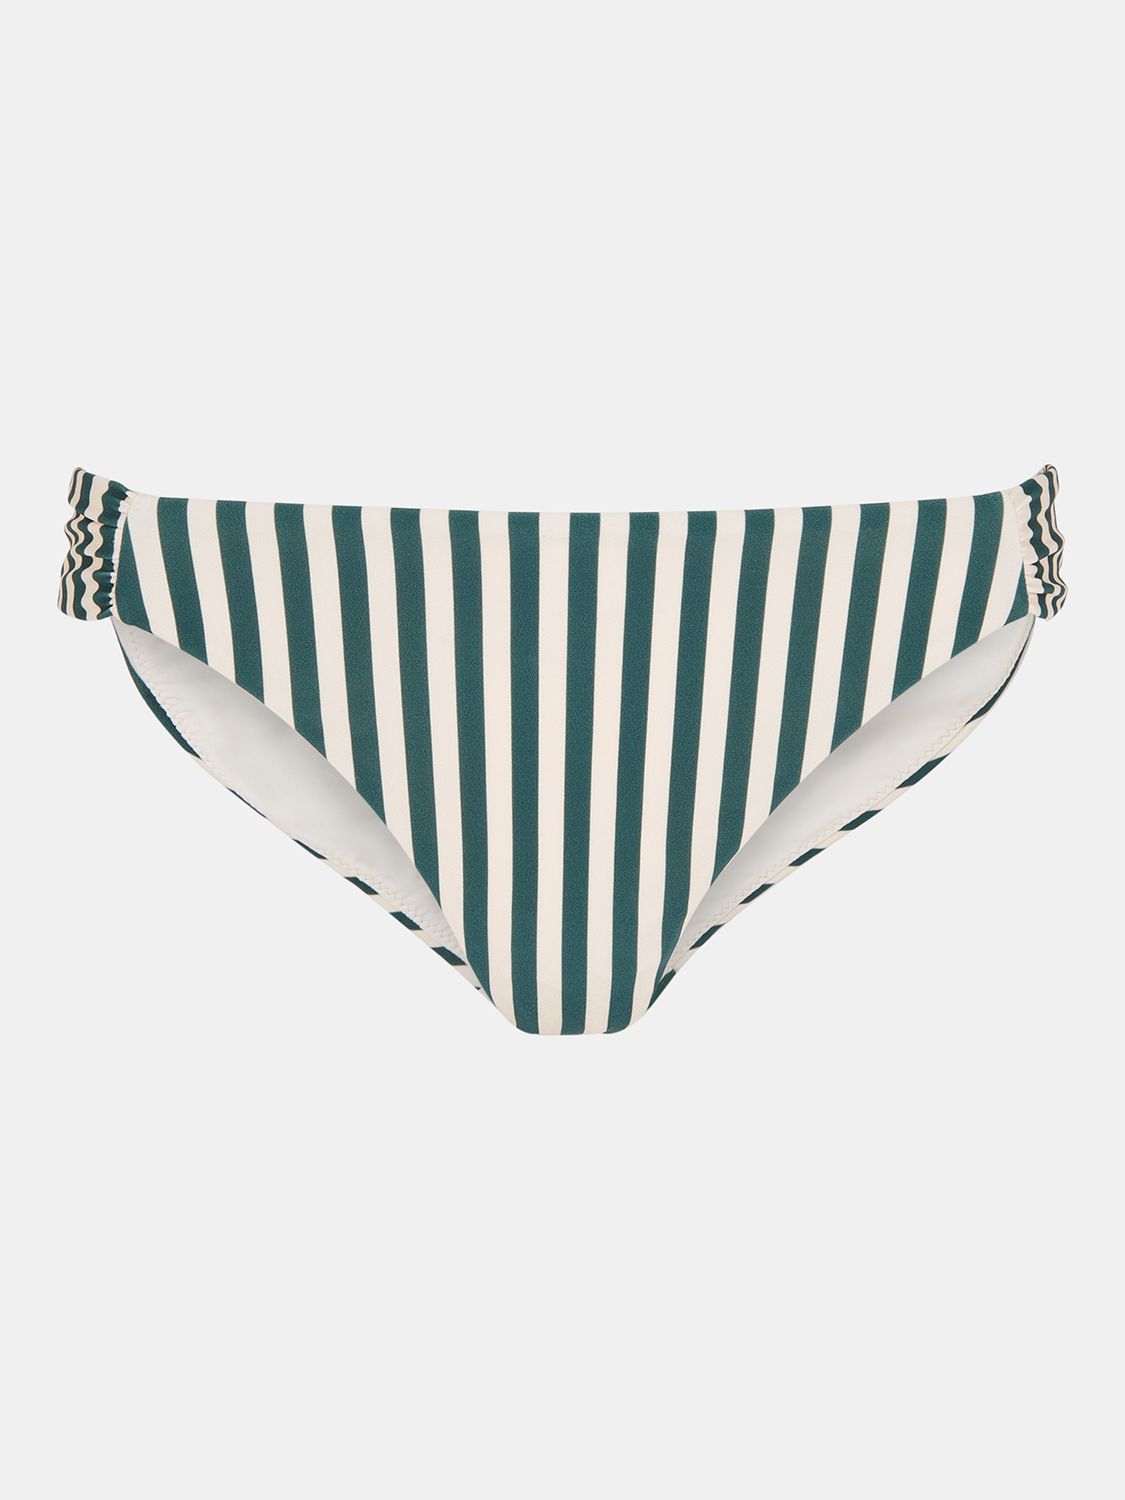 Whistles Striped Bikini Bottoms, Green/White, 6